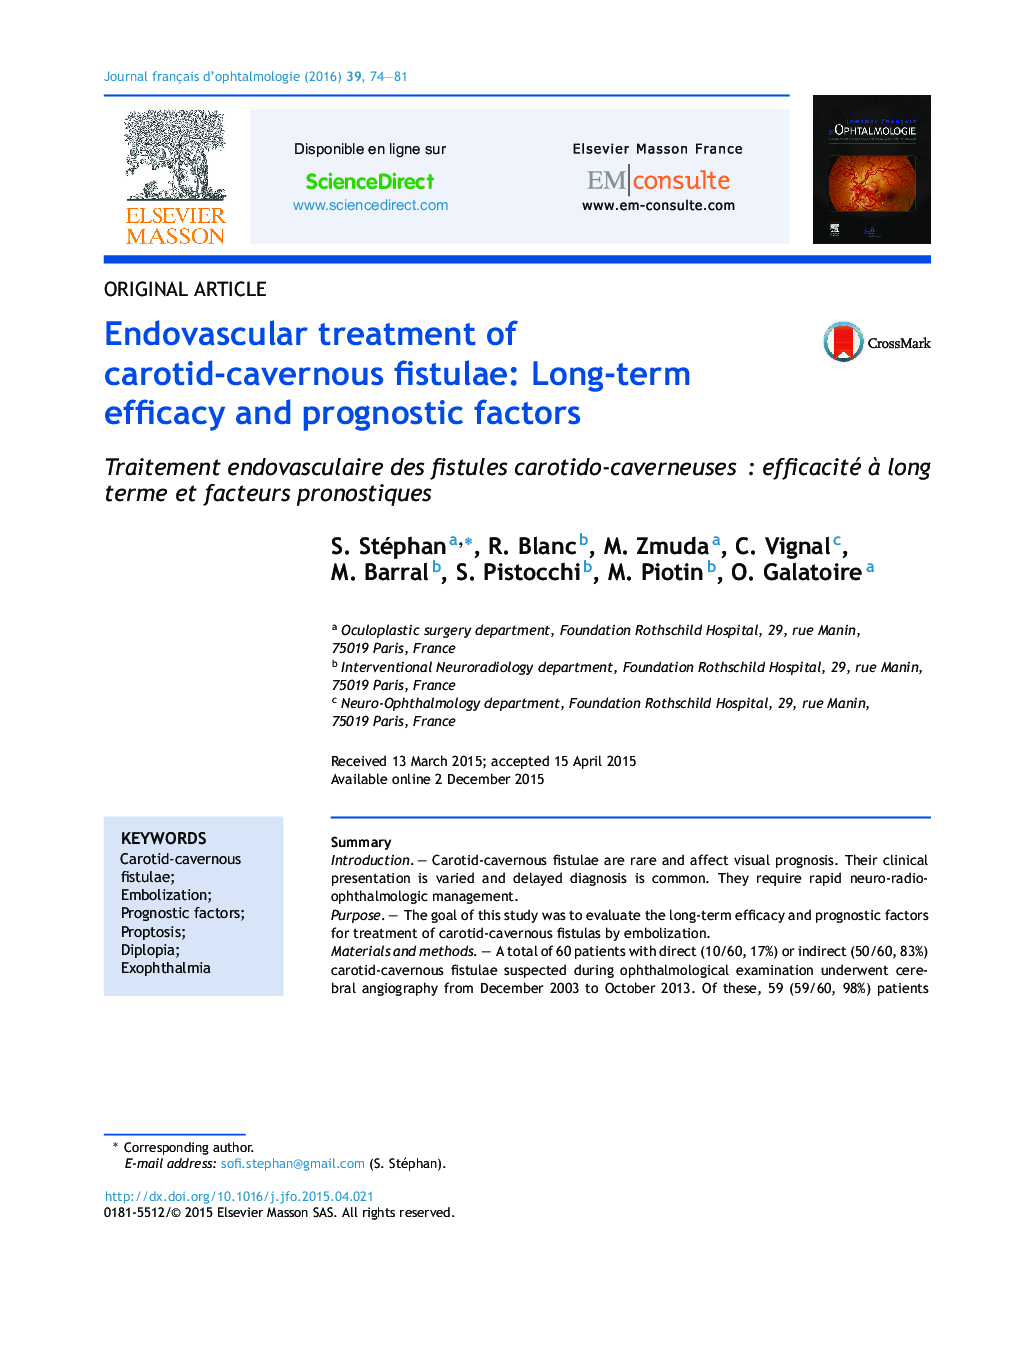 Endovascular treatment of carotid-cavernous fistulae: Long-term efficacy and prognostic factors